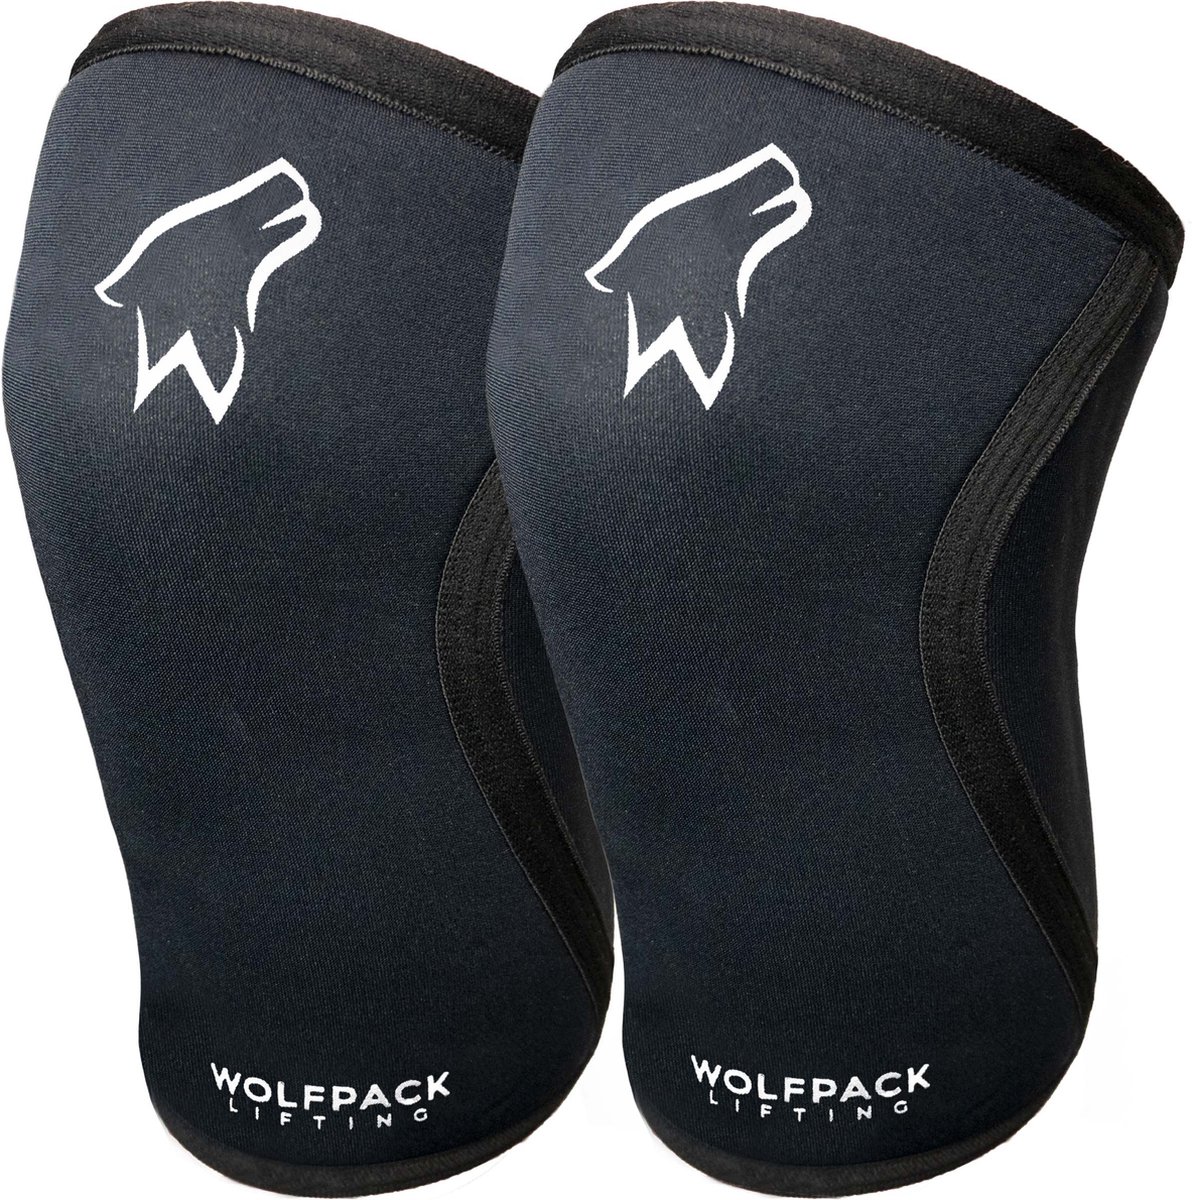 Wolfpack Lifting - Knee Sleeves - Knie Brace - Fitness - Krachttraining - Squatten - Maat S - Zwart/wit - 2 stuks